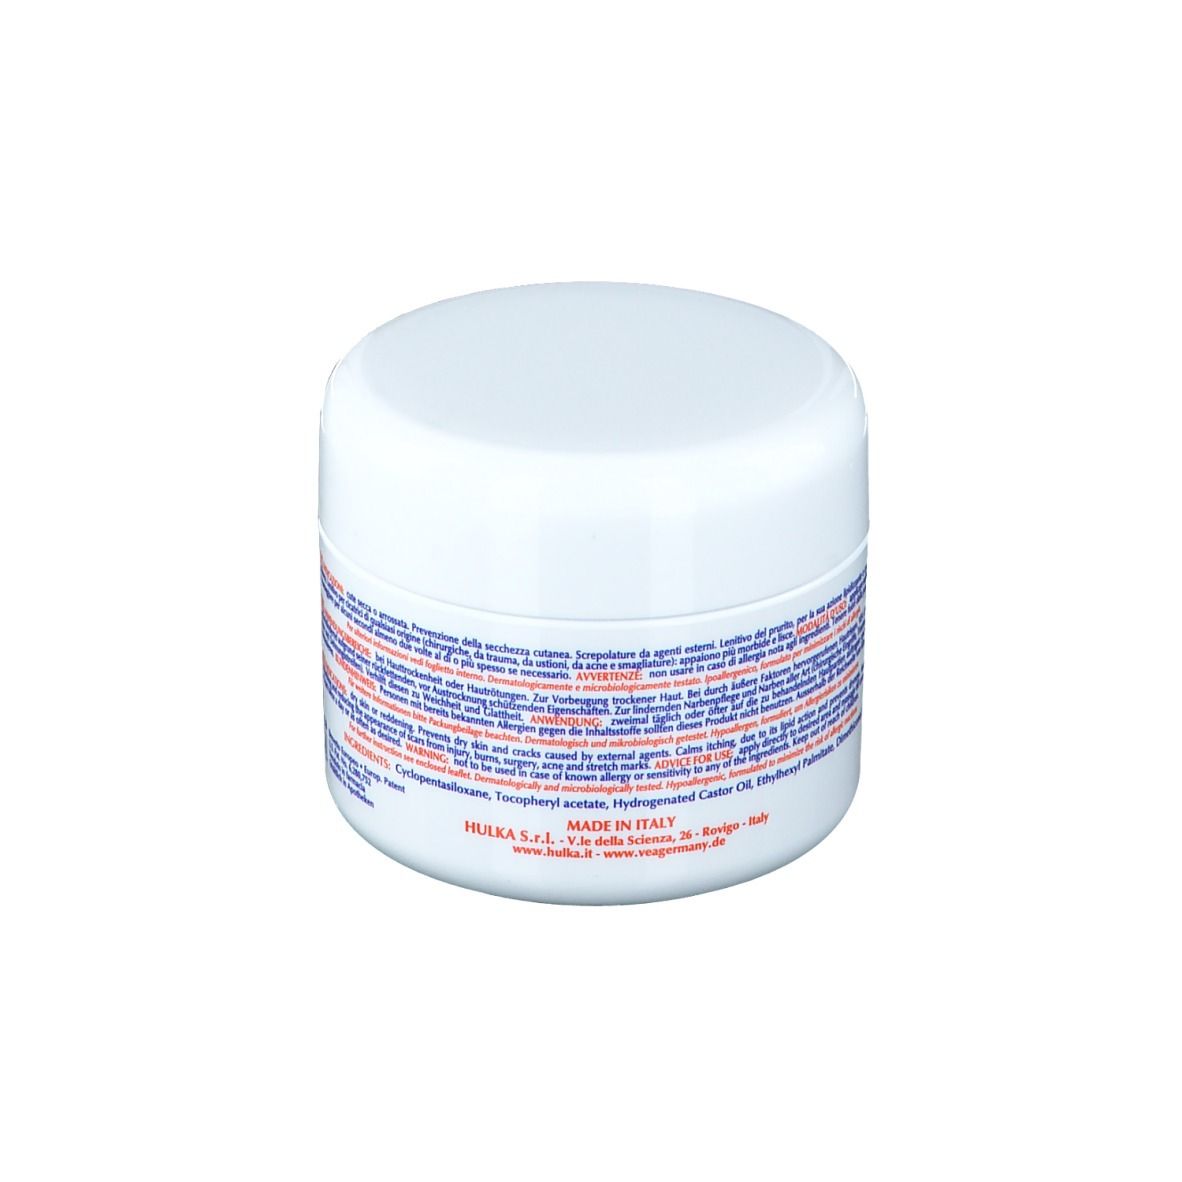 VEA Lipogel - Regenerating Cream - 200ml